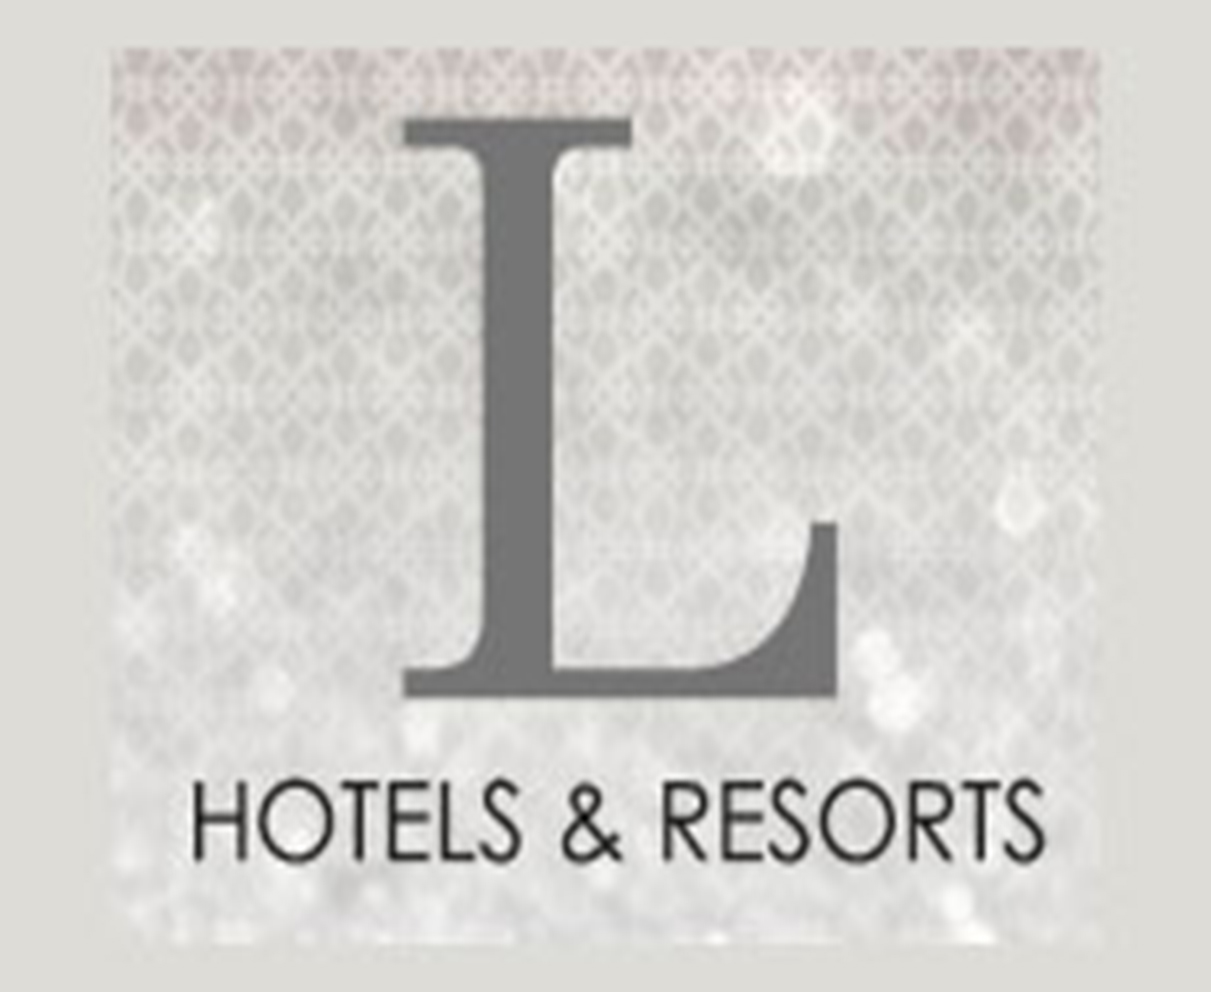 
L Hotel & Resorts